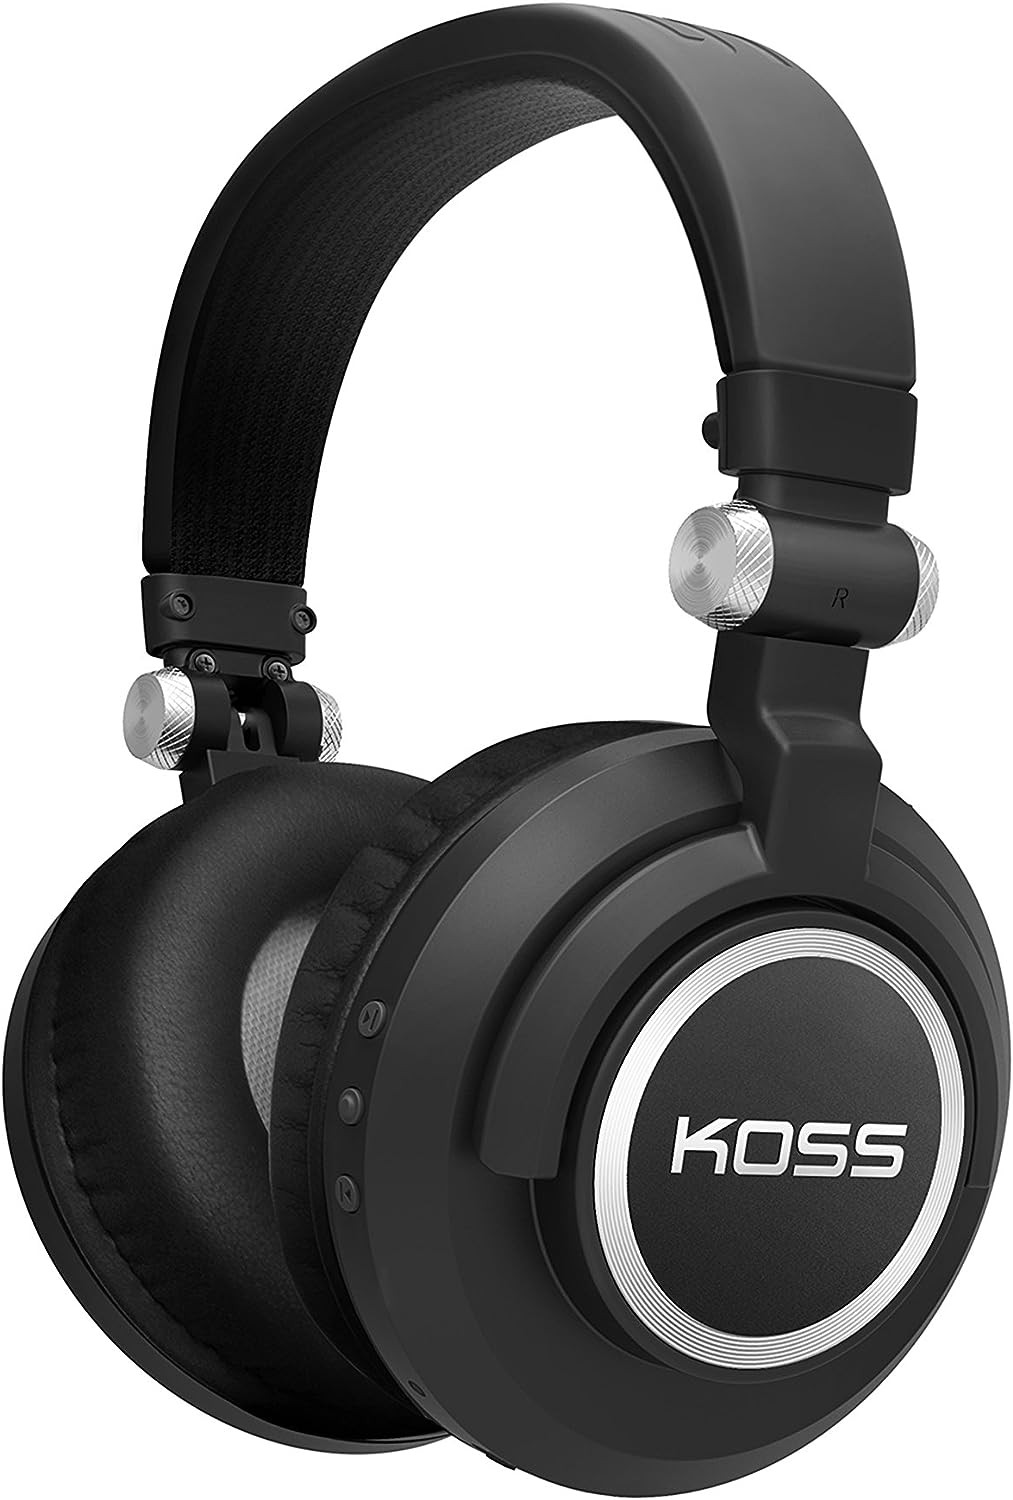 Koss-BT540I - Bluetooth headphones.